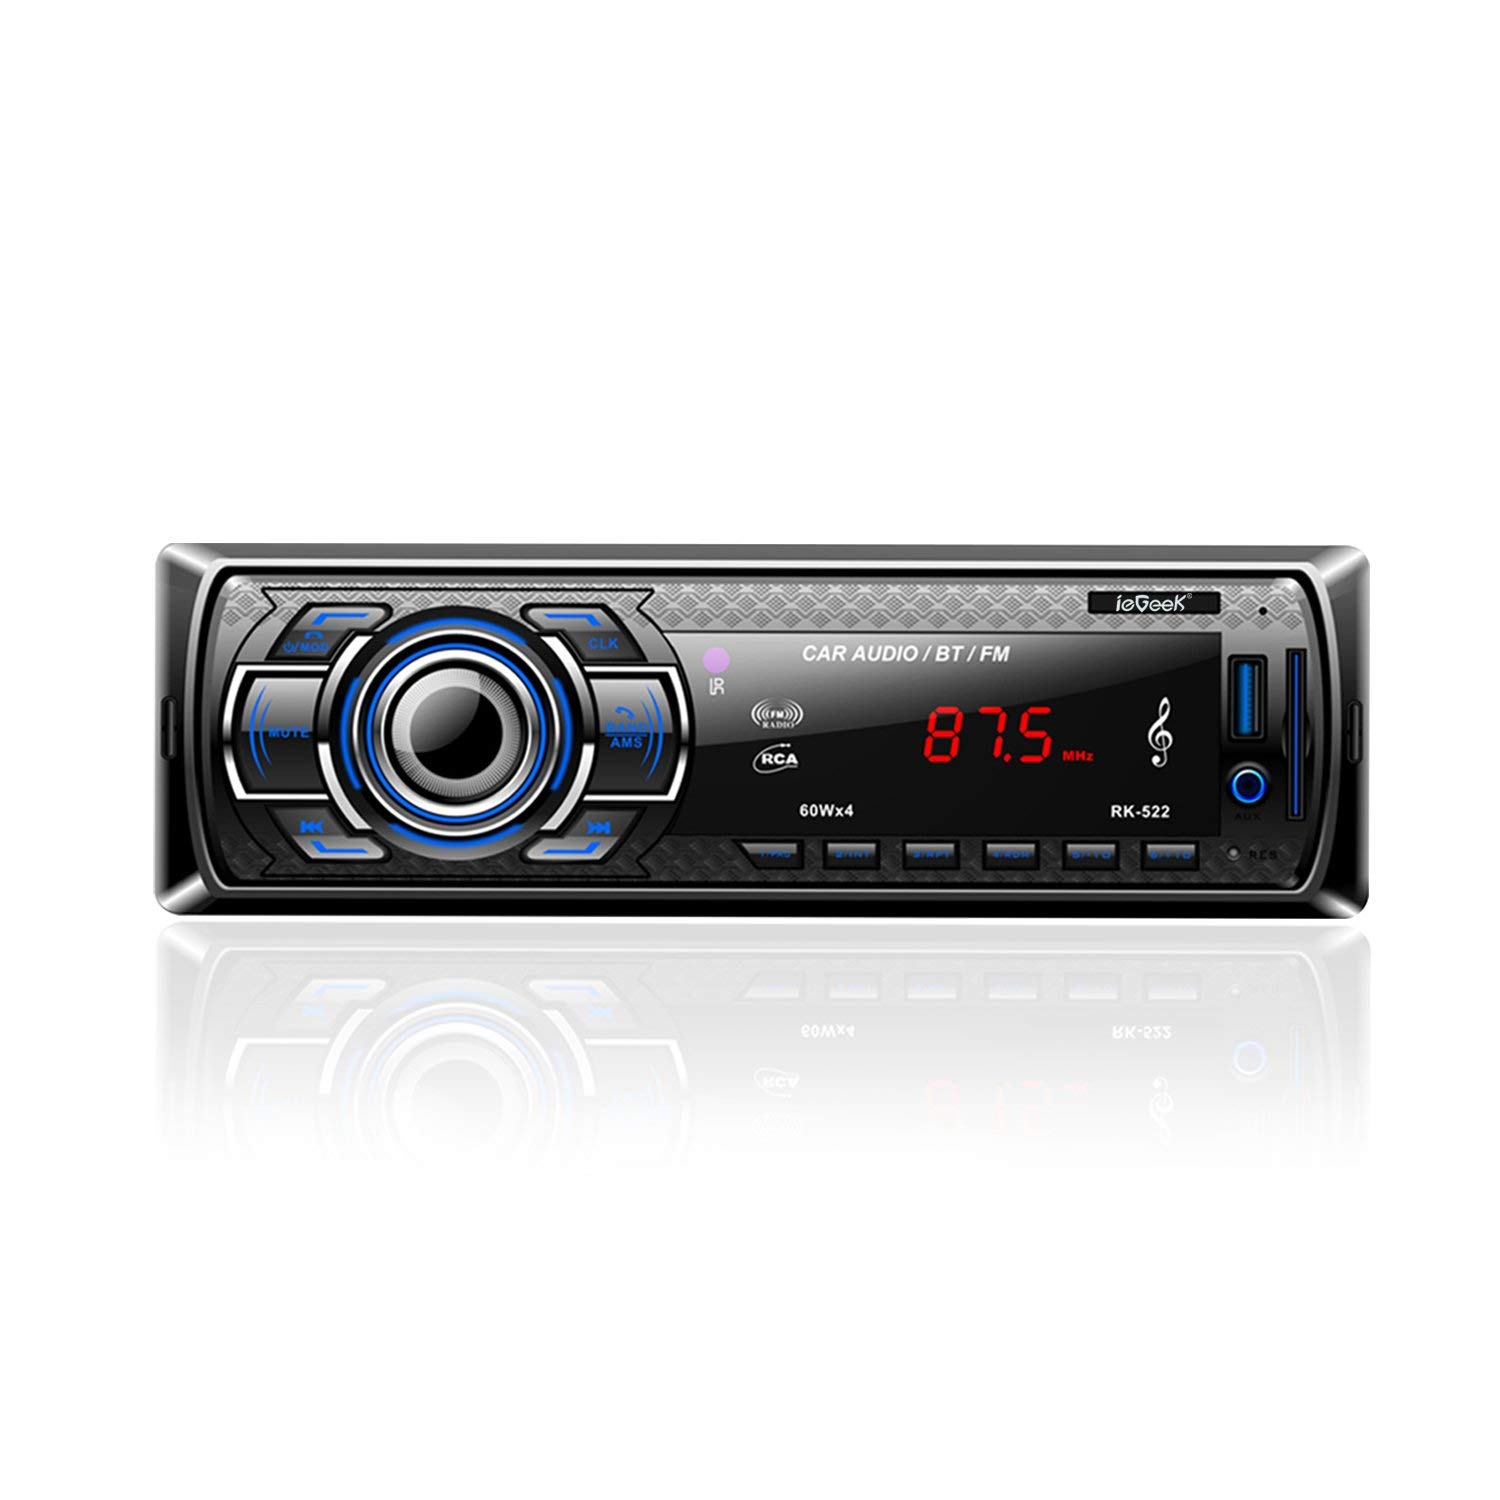 ieGeek カーオーディオ １DIN Bluetooth レシーバー 車載MP3プレーヤー